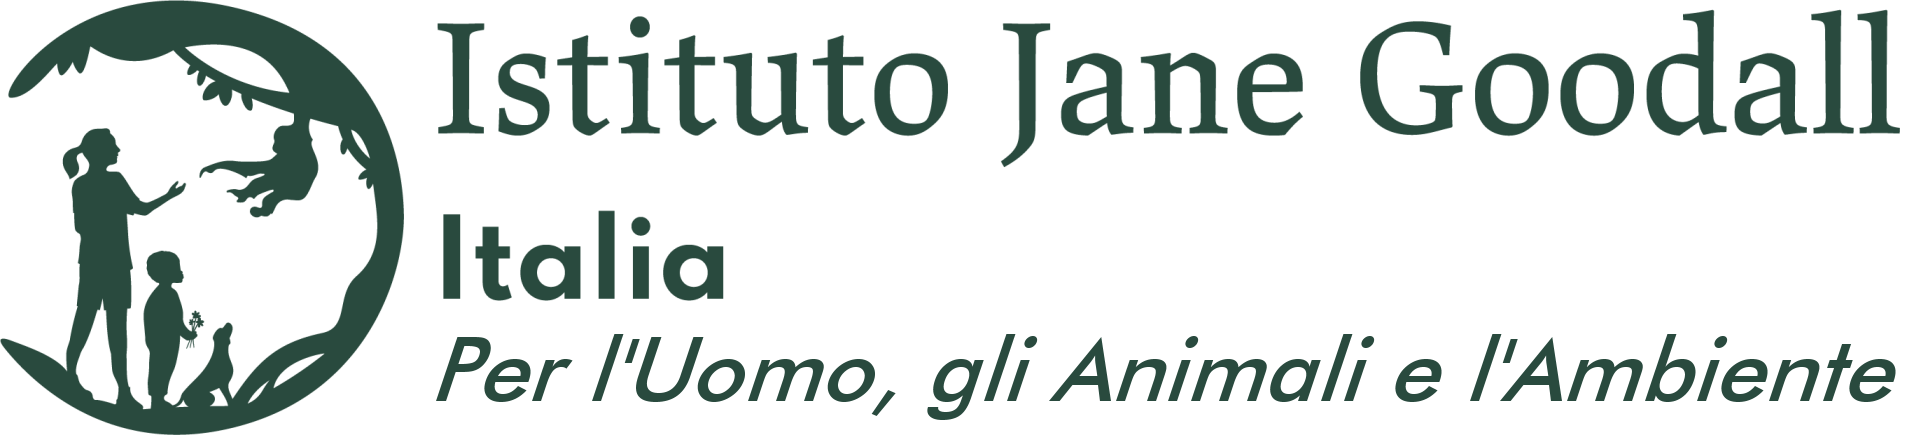 Istituto Jane Goodall Italia